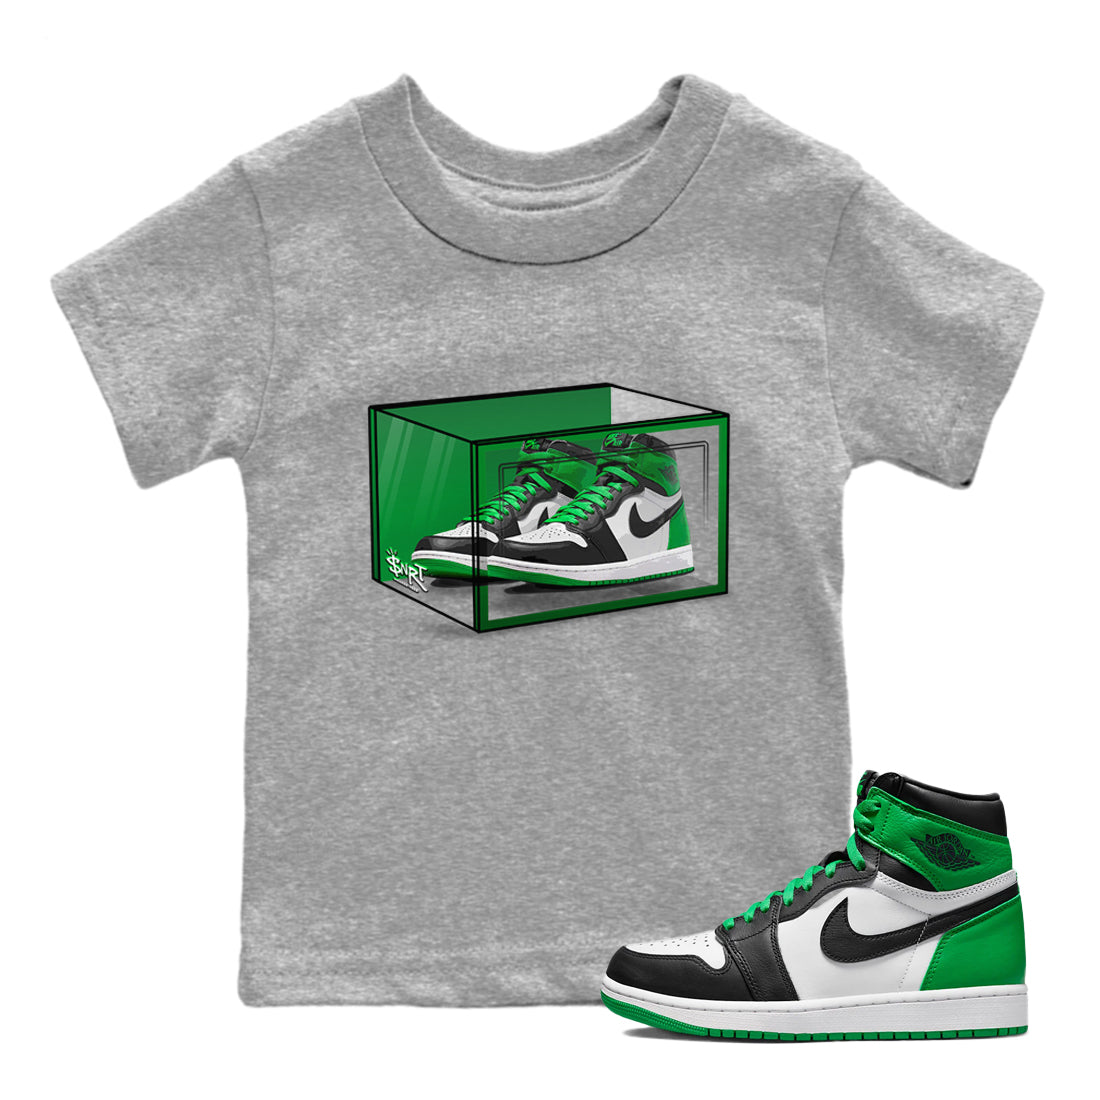 Air Jordan 1 Celtics Shoe Box Baby and Kids Shirts Air Jordan 1 Celtics Kids Shirts Size Chart